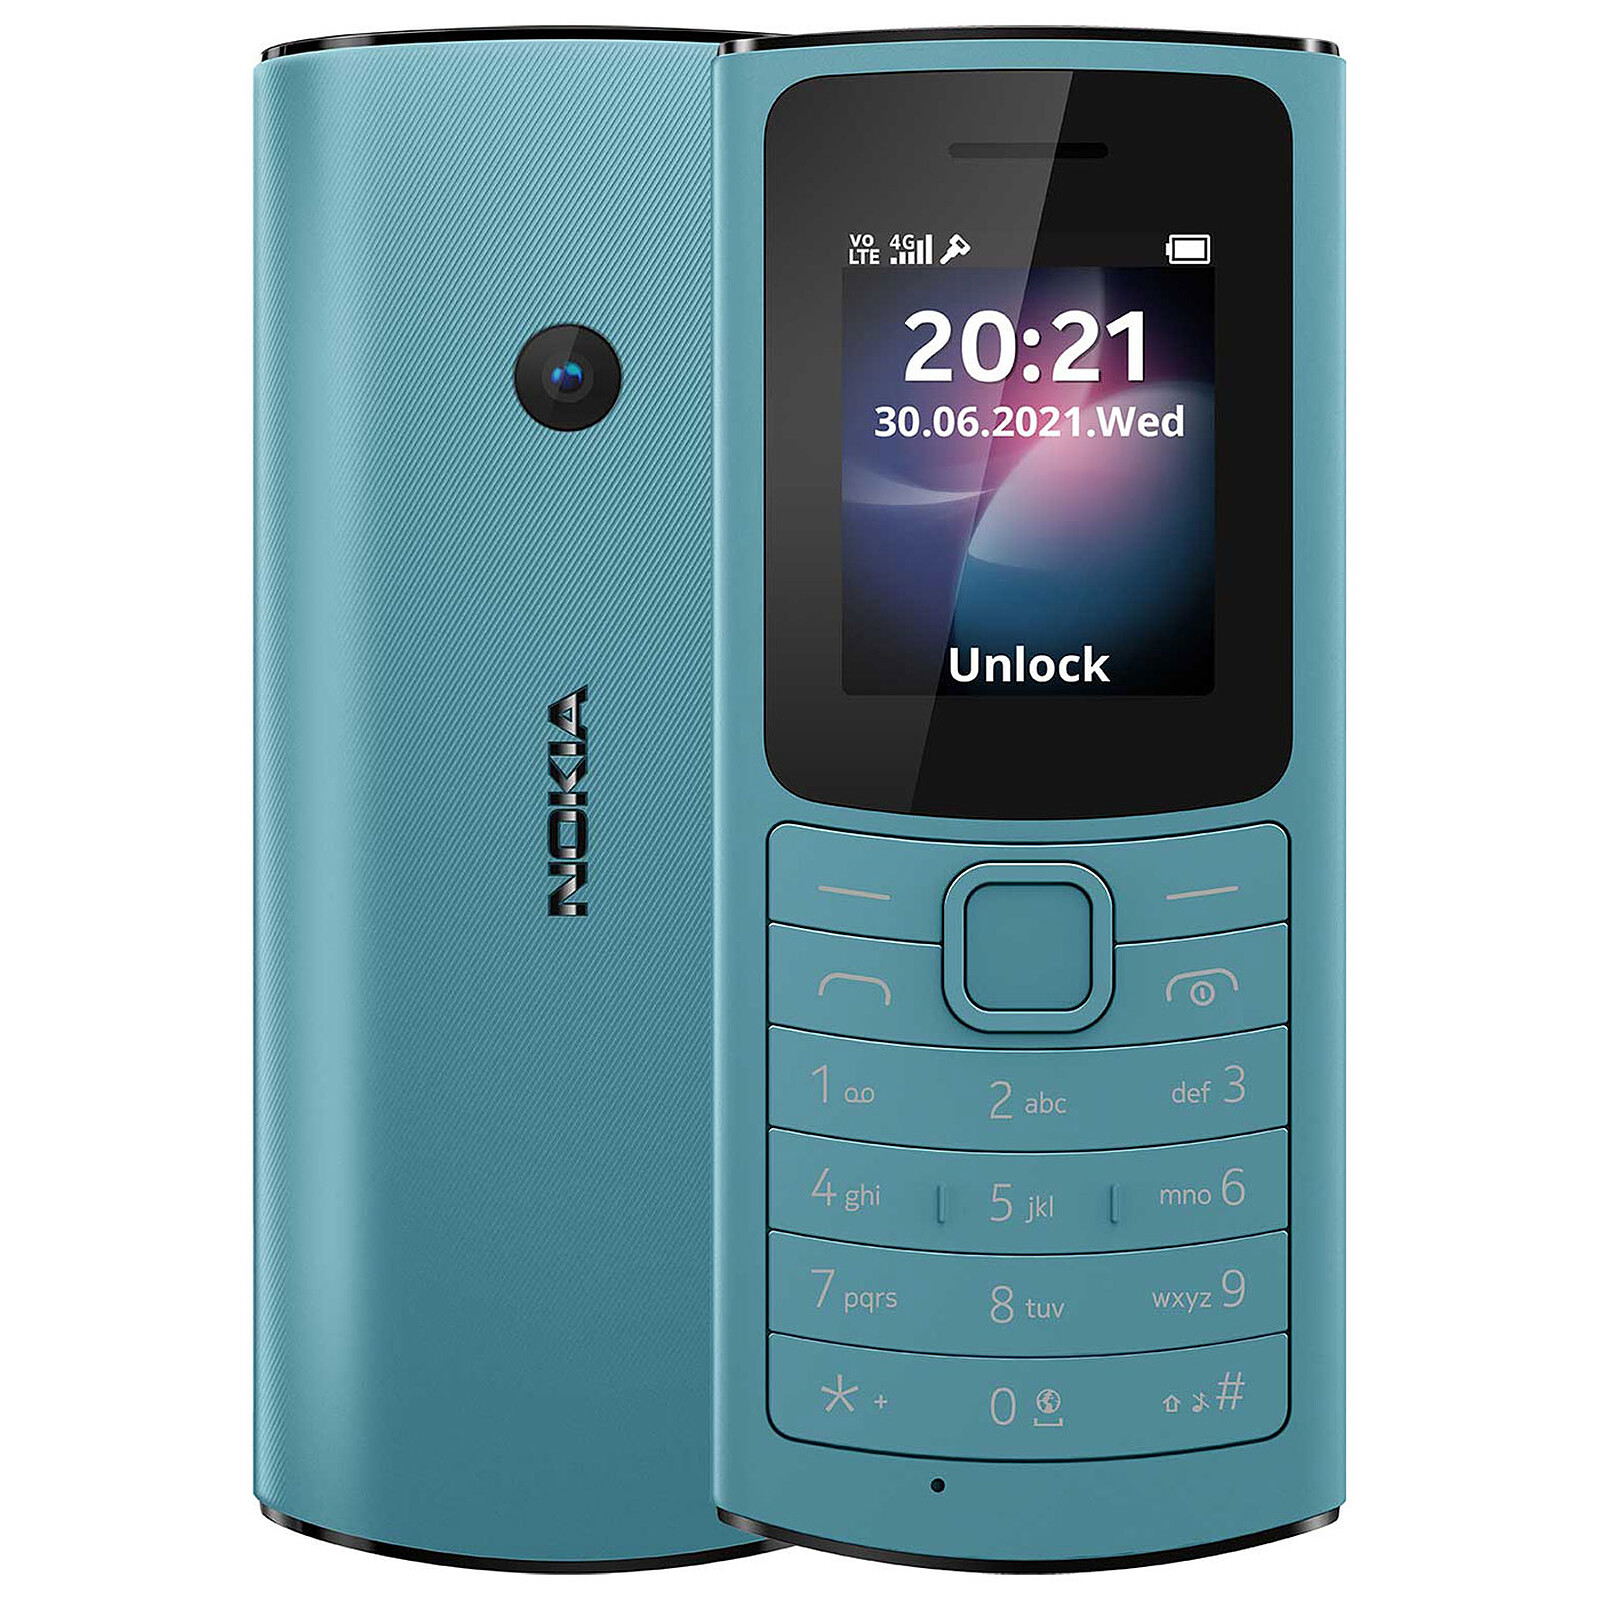 Teléfono Móvil - Nokia 5710 Xpressaudio, 2,4, 48MB RAM + 128 MB, Negro/Rojo